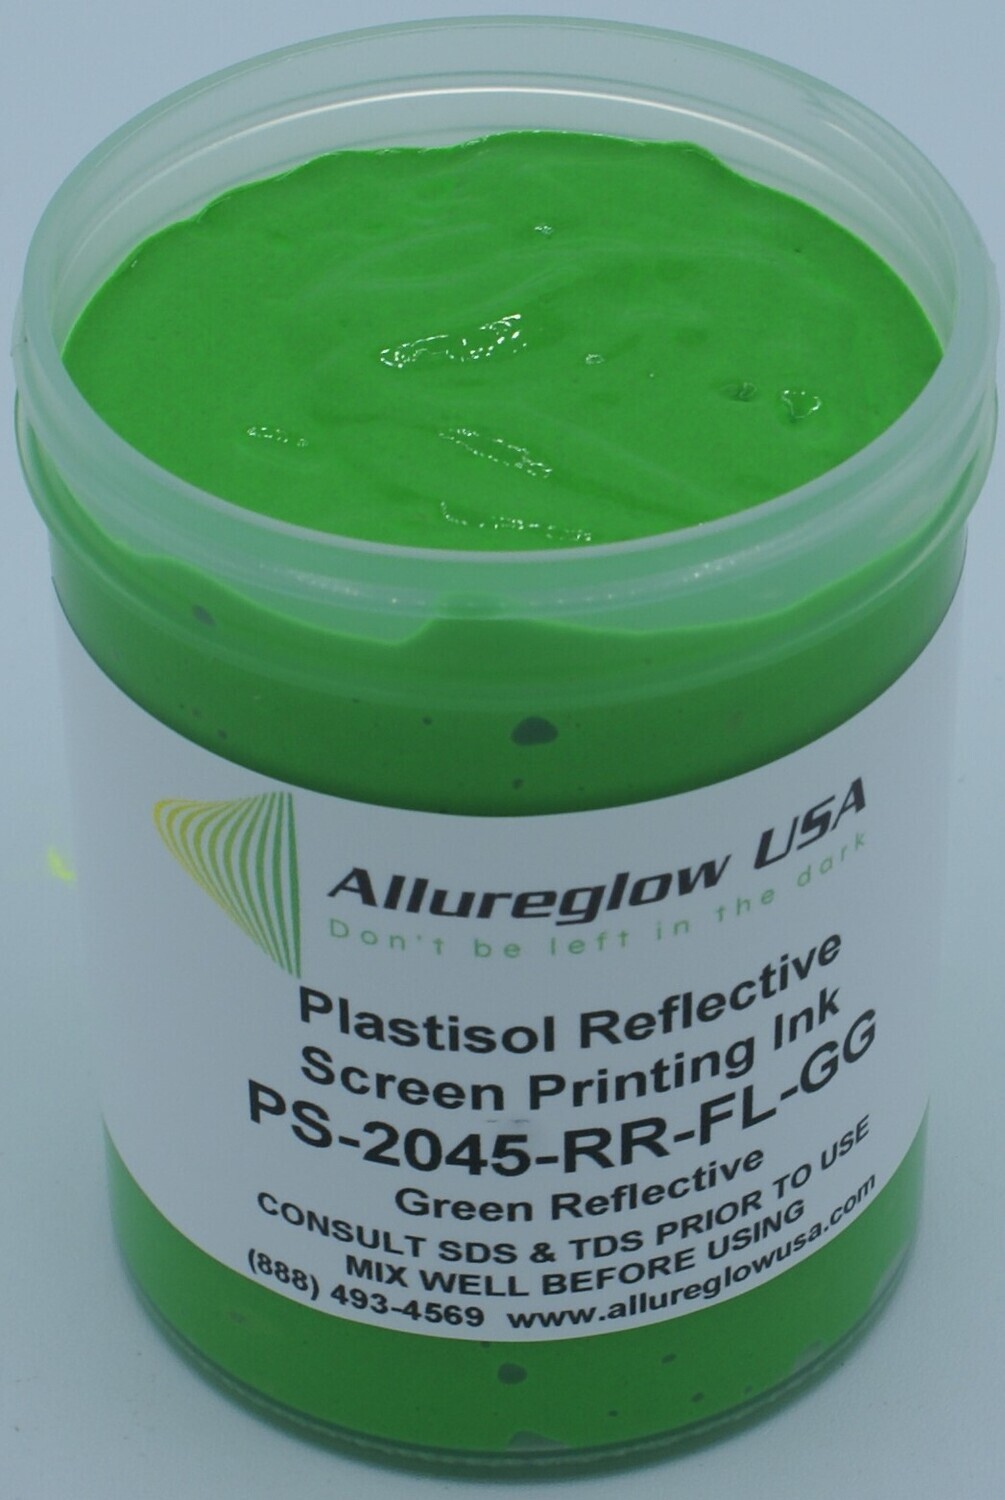 PS-2045-RR-FL-GG-8OZ  PLASTISOL FLUORESCENT GREEN REFLECTIVE INK 8OZ